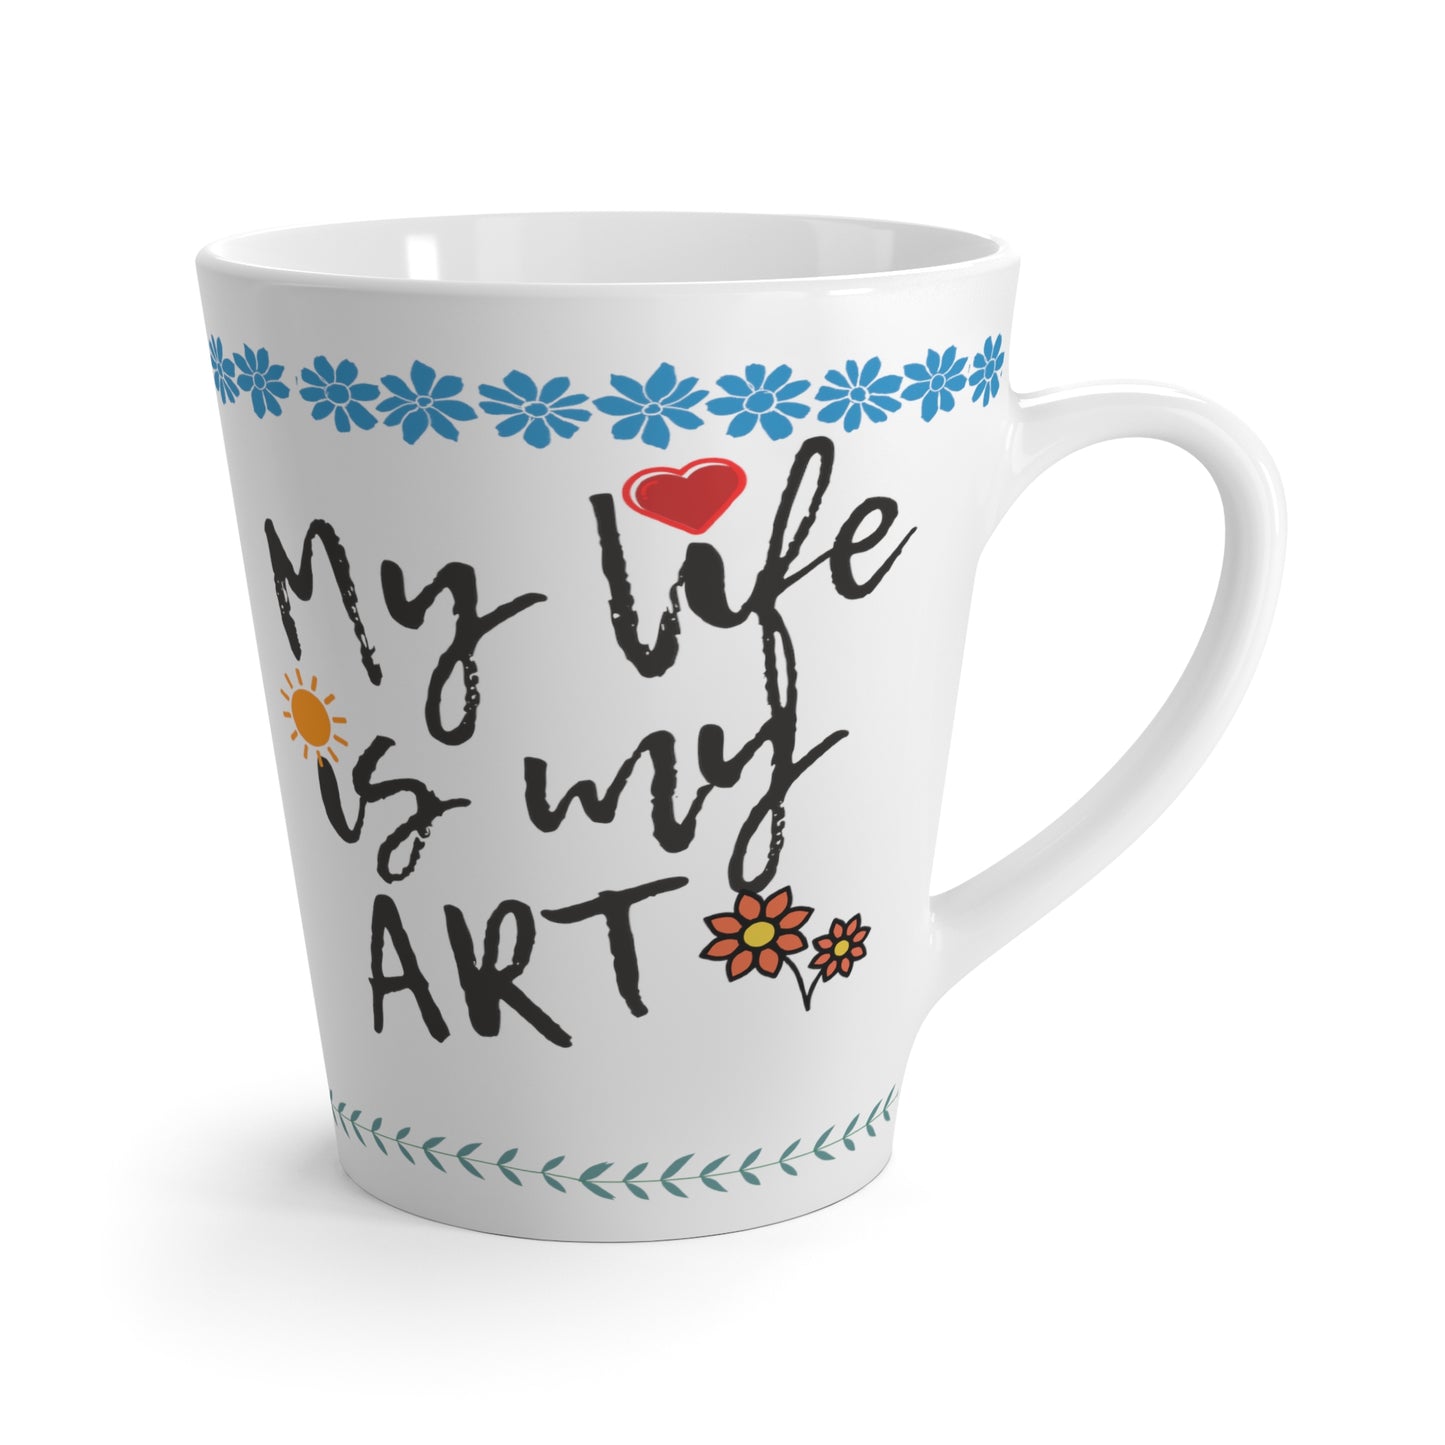 My Art Is My Life-My Life Is My Art - Creative Artist Mug (latte)